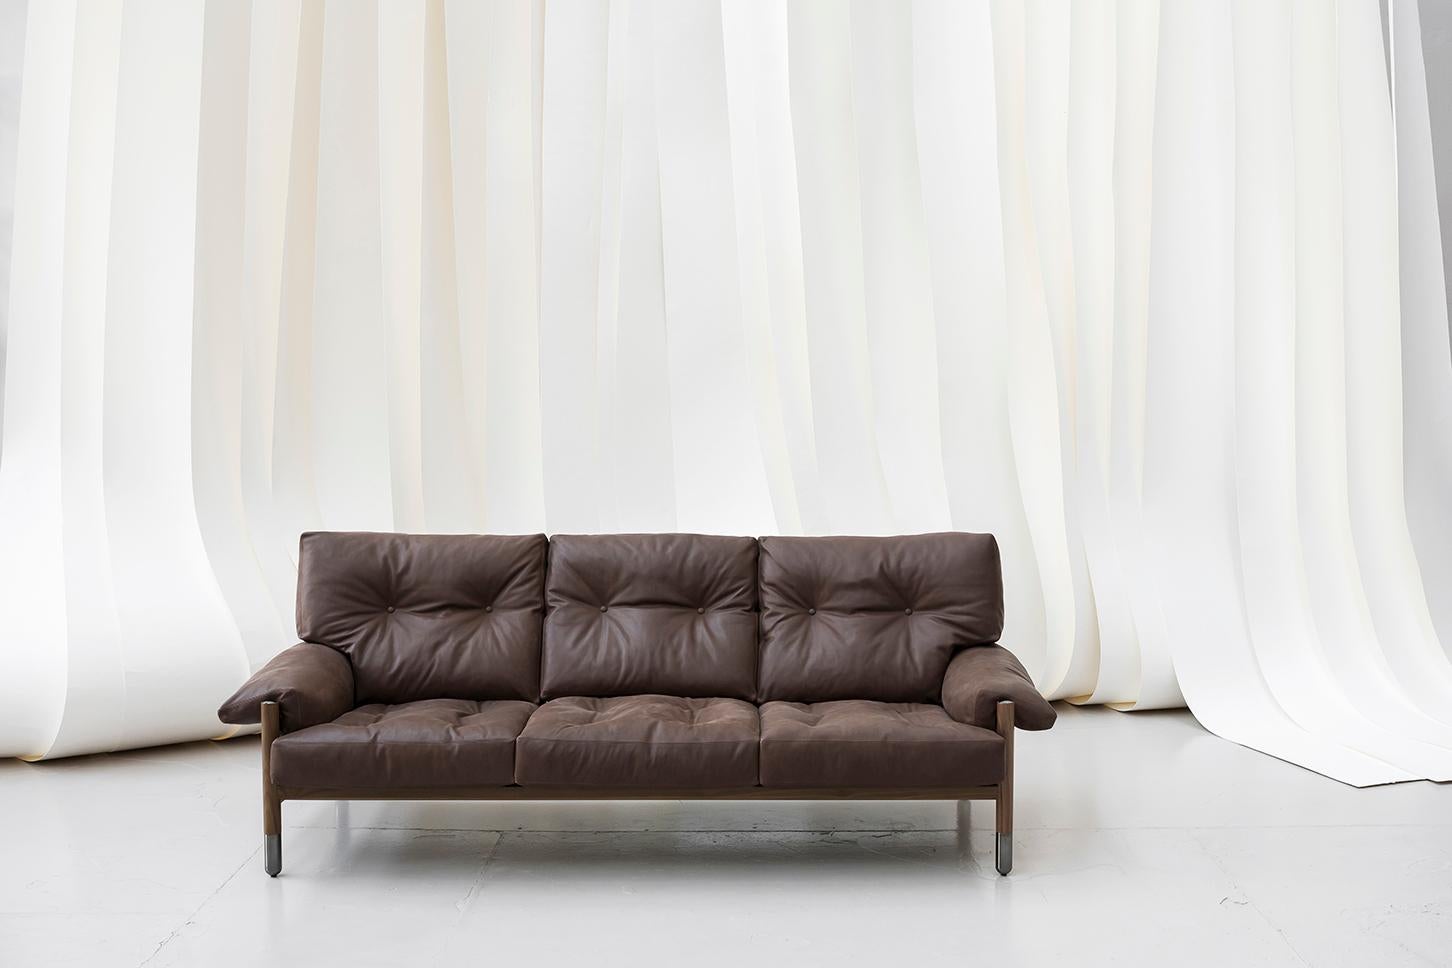 Anpassbares Tacchini-Sella-Sofa, entworfen von Carlo de Carli im Angebot 3